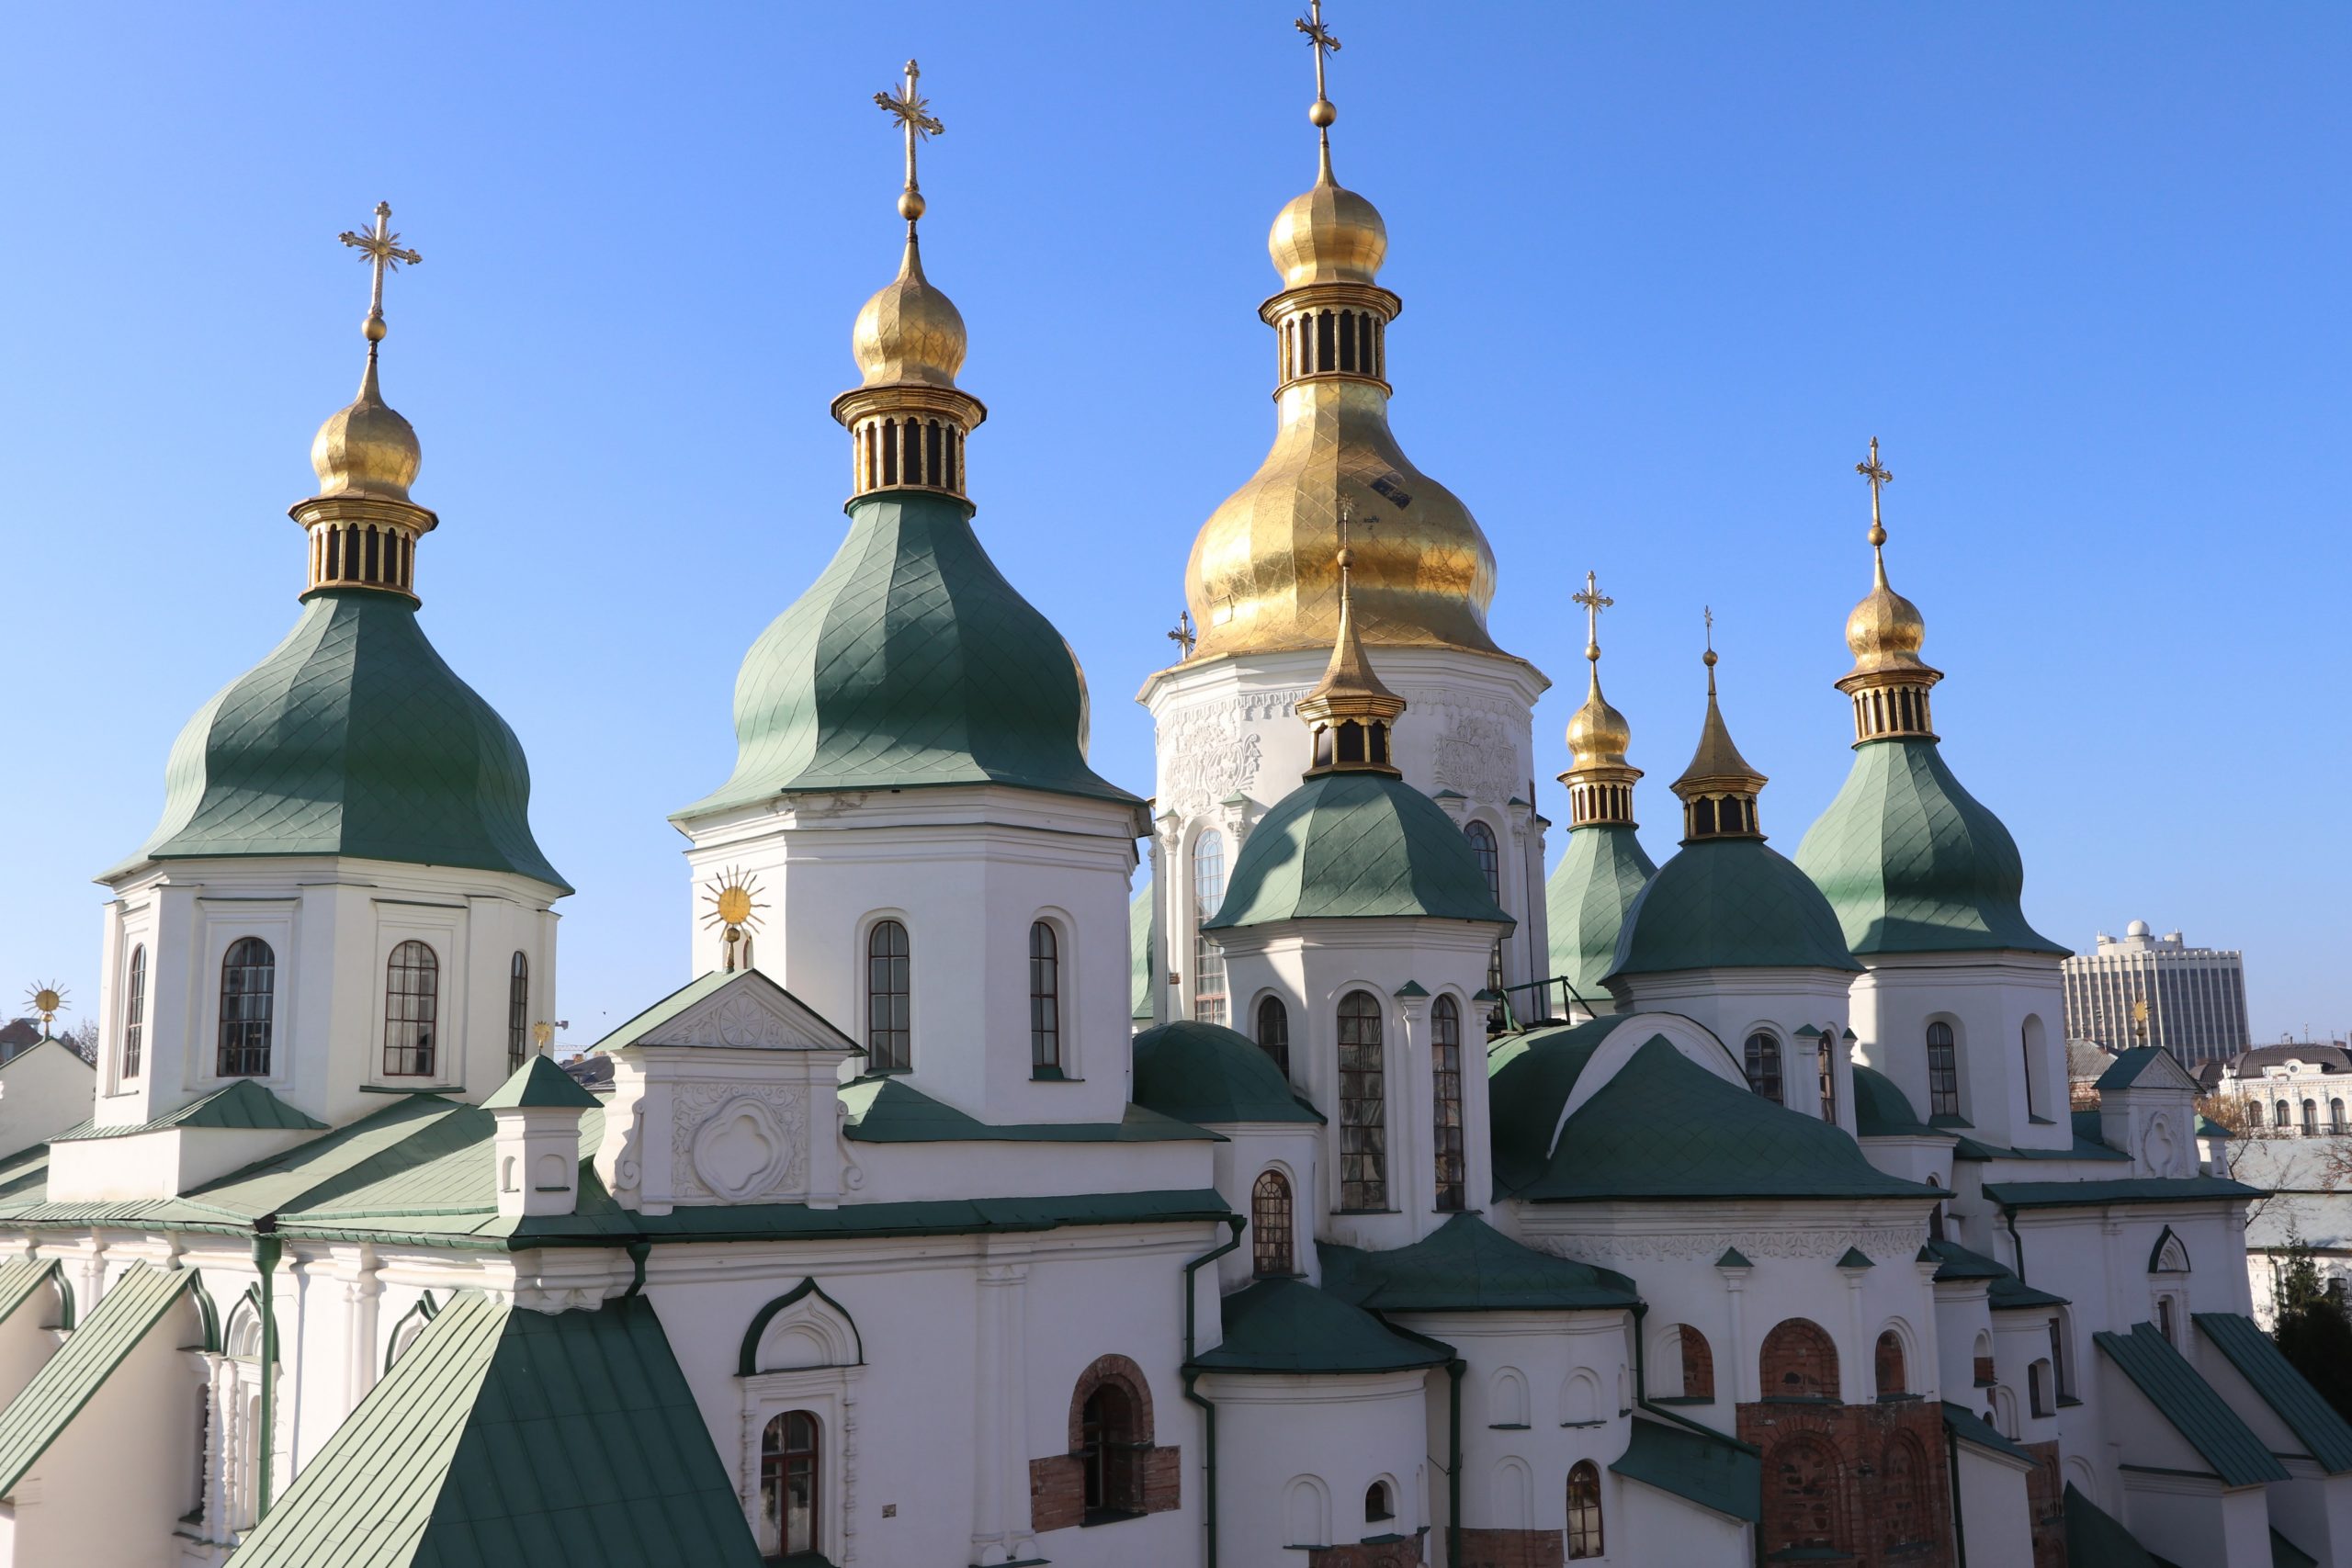 Cattedrale di Santa Sofia (Kiev). Foto di Juan Antonio Segal